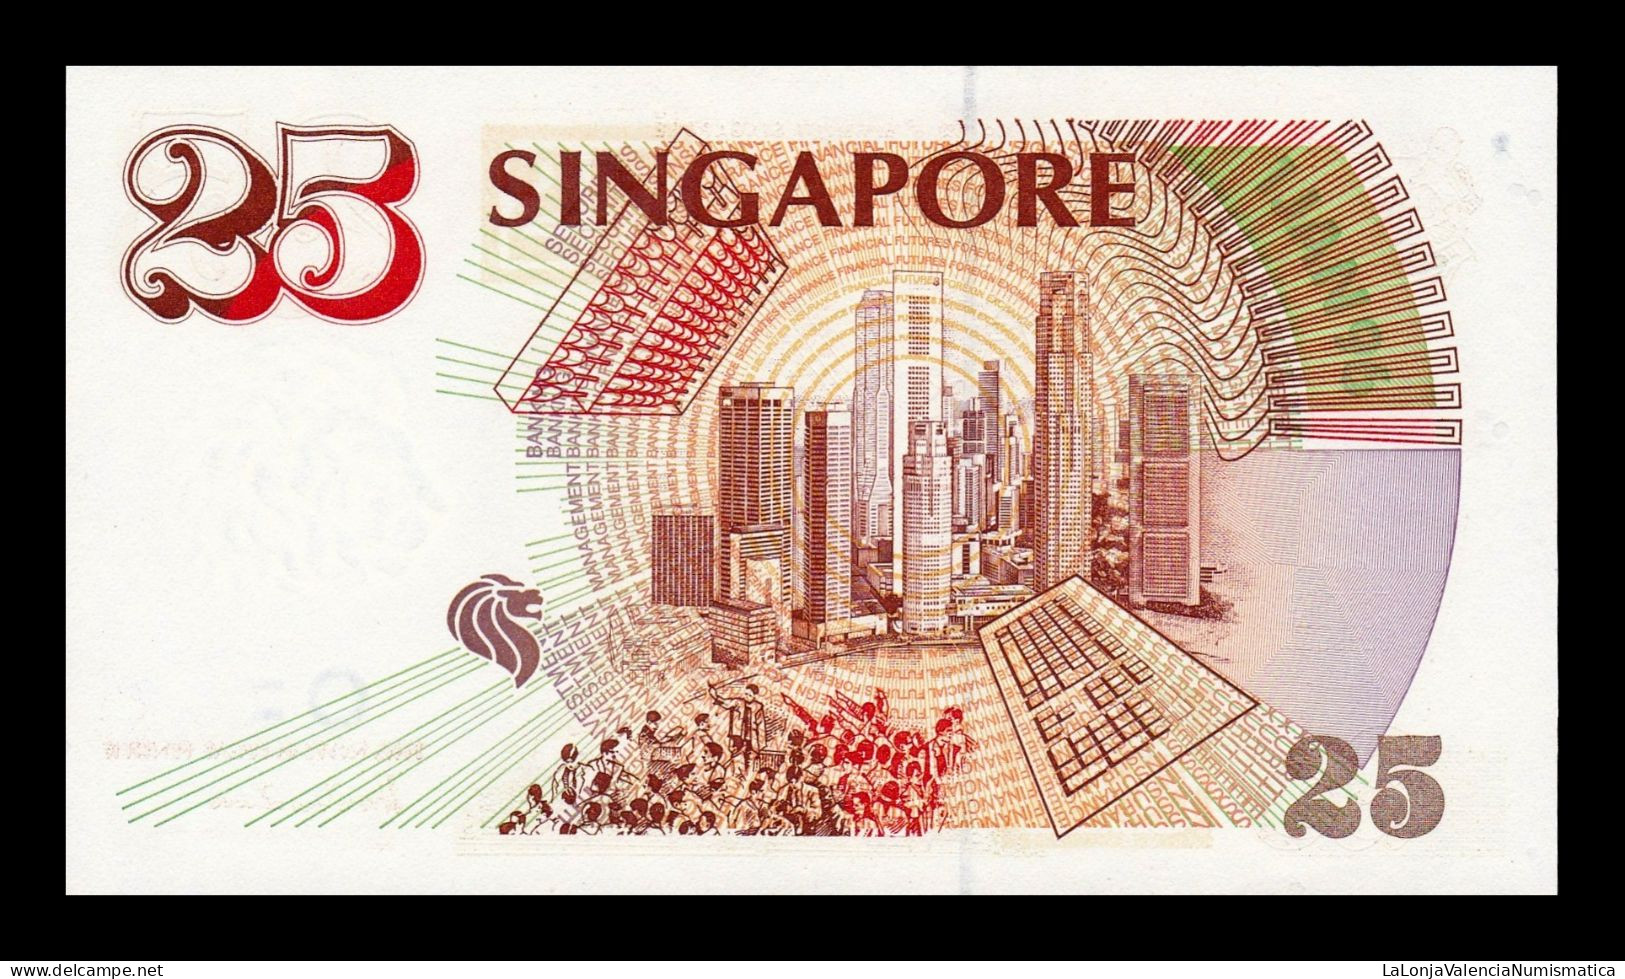 Singapur Singapore 25 Dollars Commemorative 1996 Pick 33 With Folder And Certificate Sc Unc - Singapour